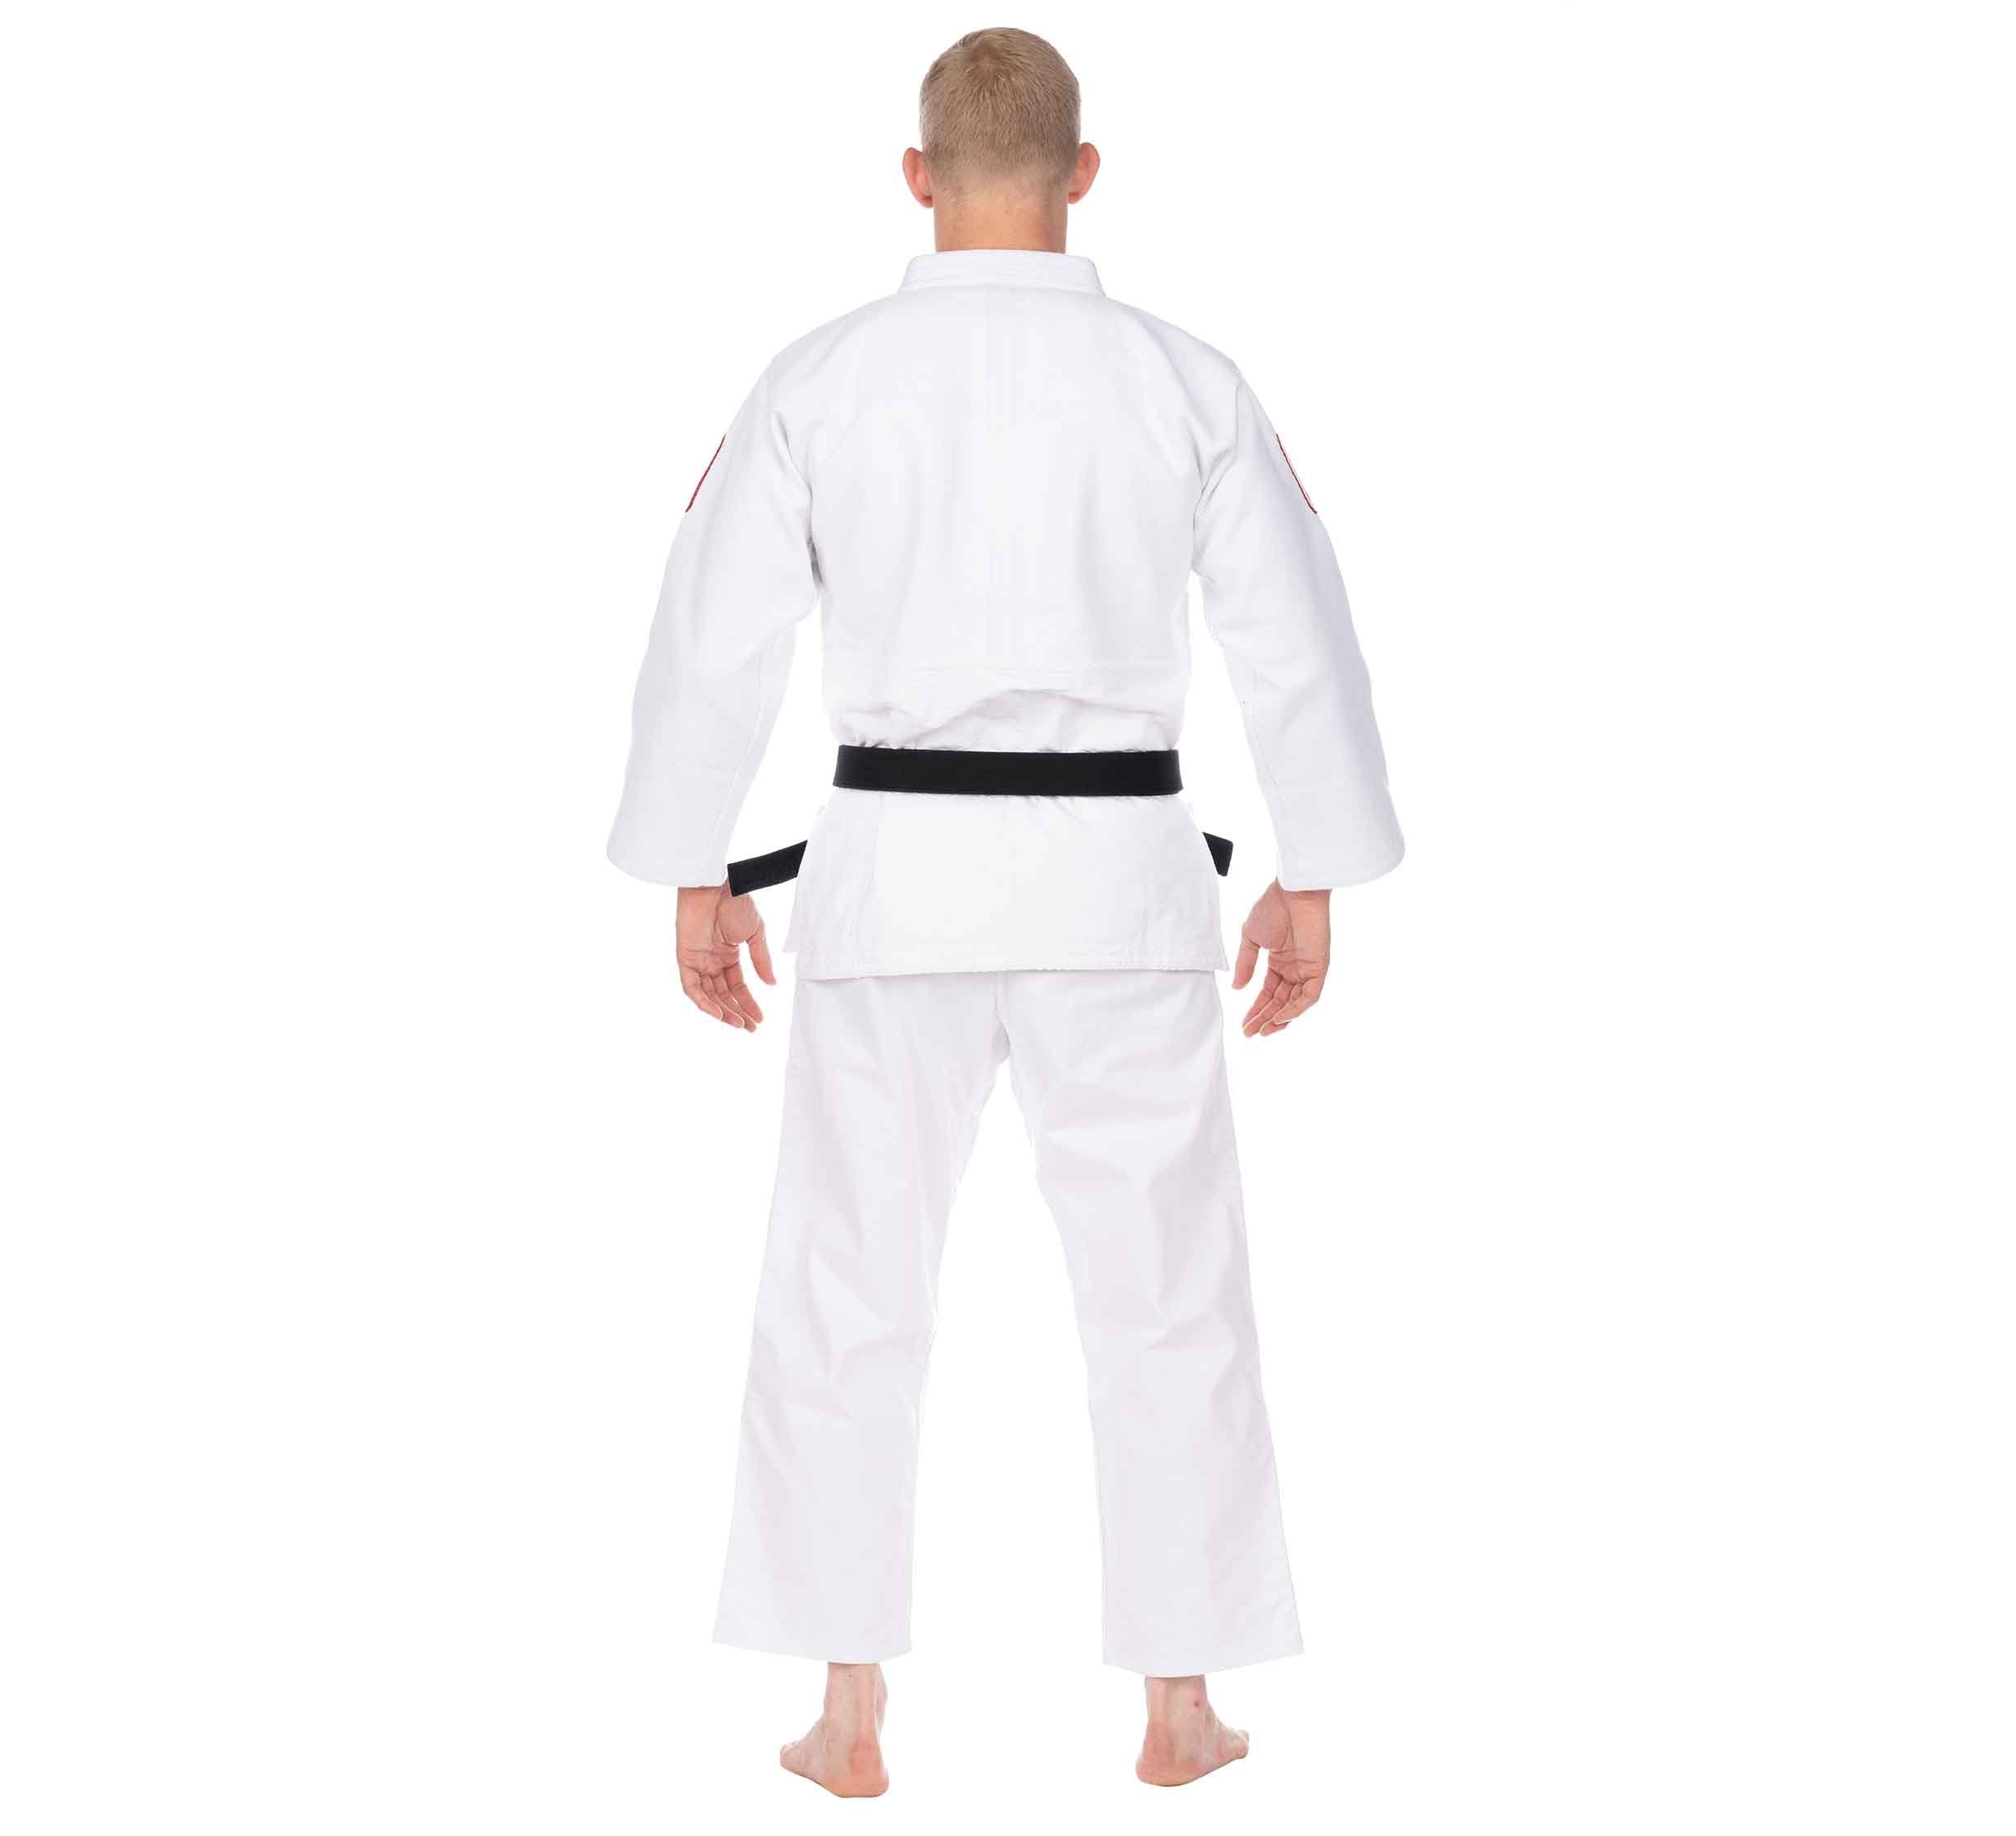 USA Judo Single Weave Gi 2.0 White